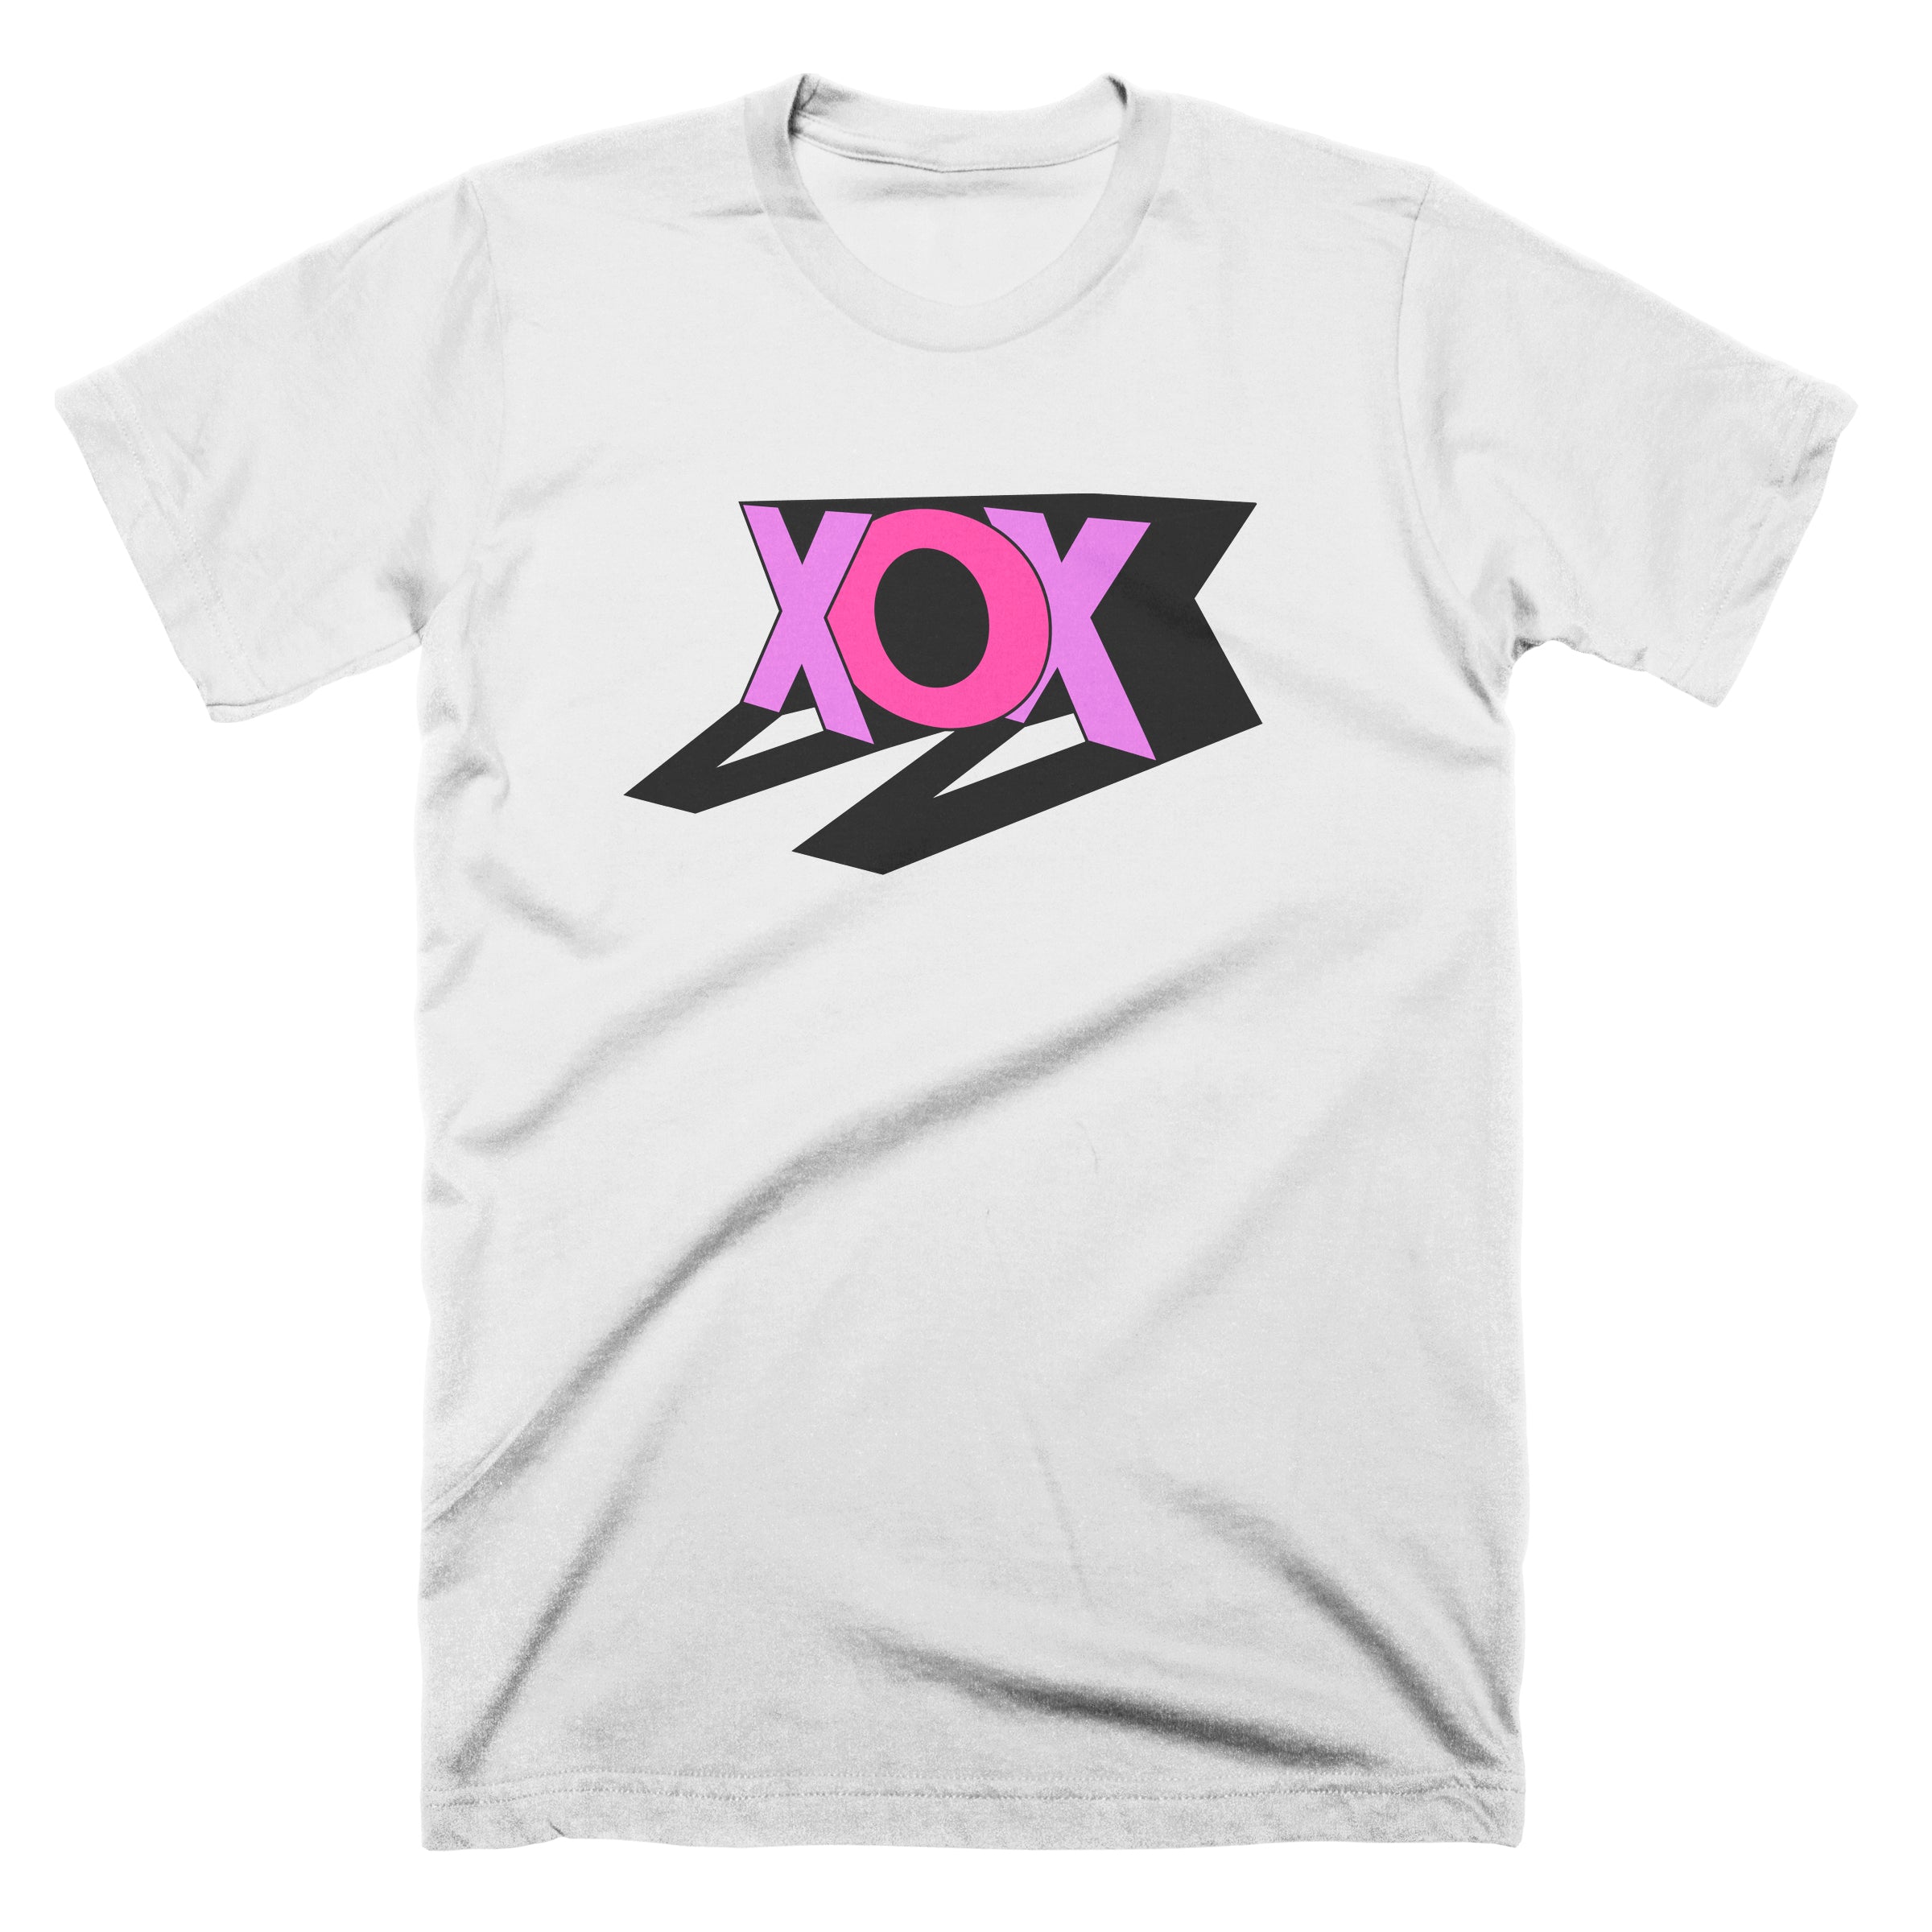 xox-mockup.jpg